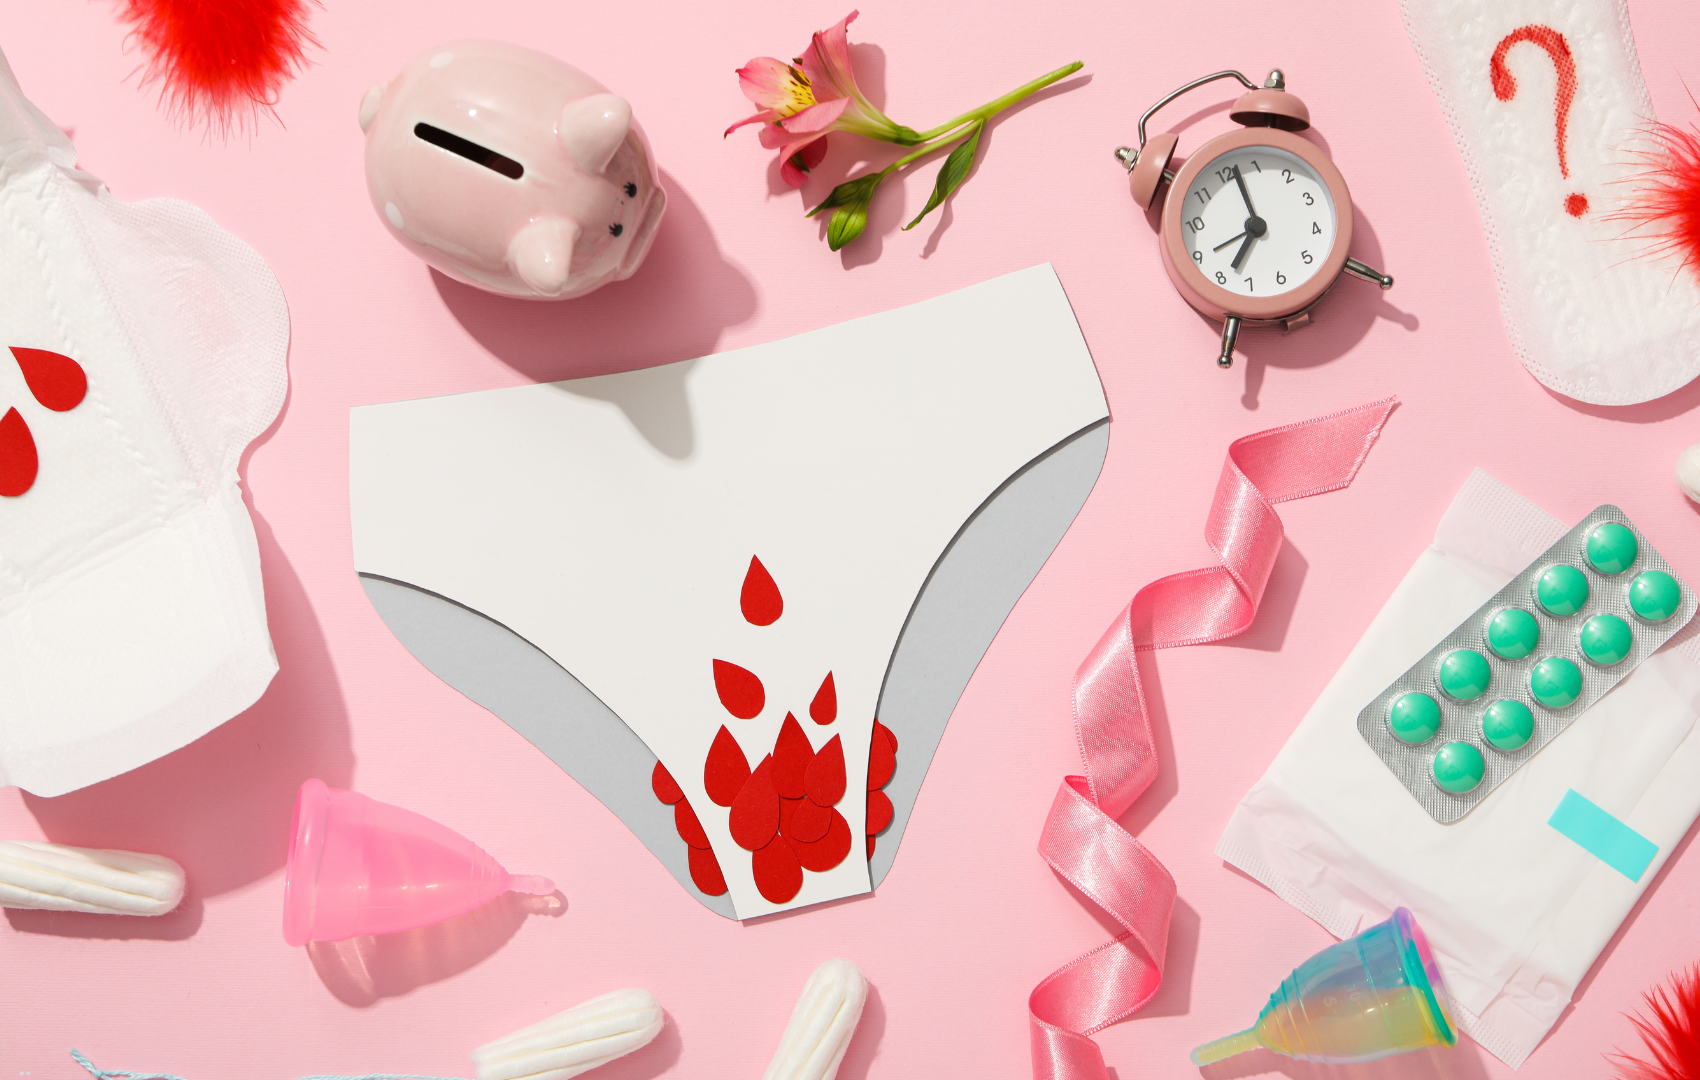 Dia mundial da higiene menstrual